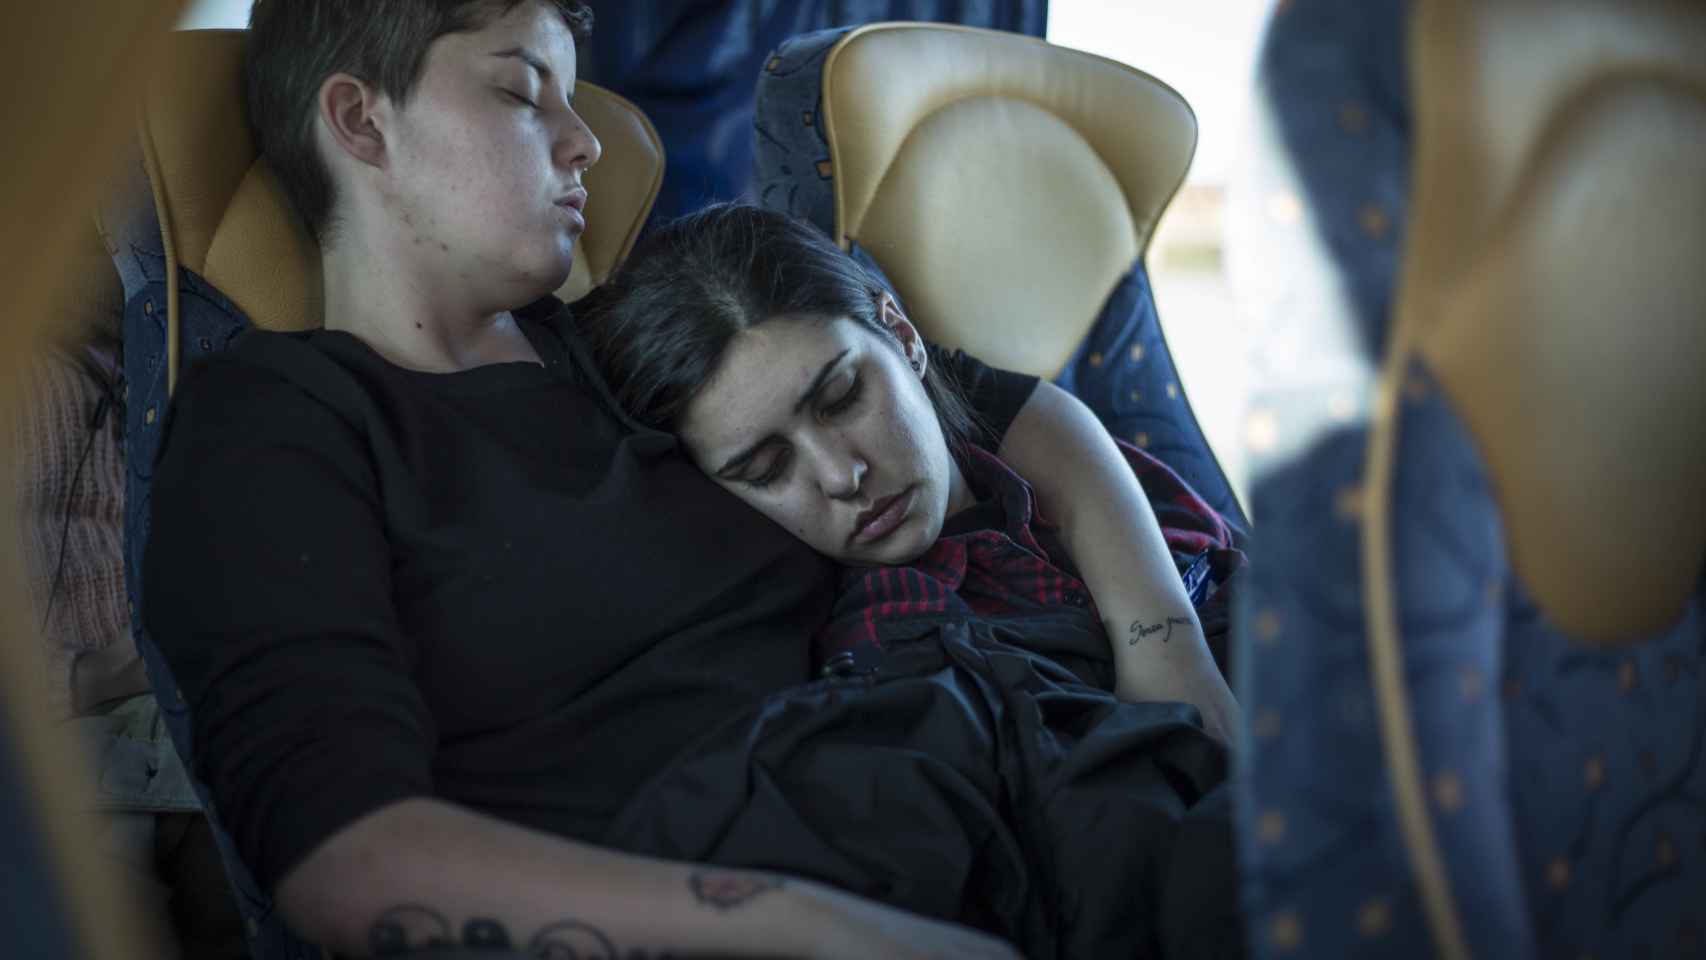 Pasajeros del autobús trans duermen en el trayecto a Madrid.